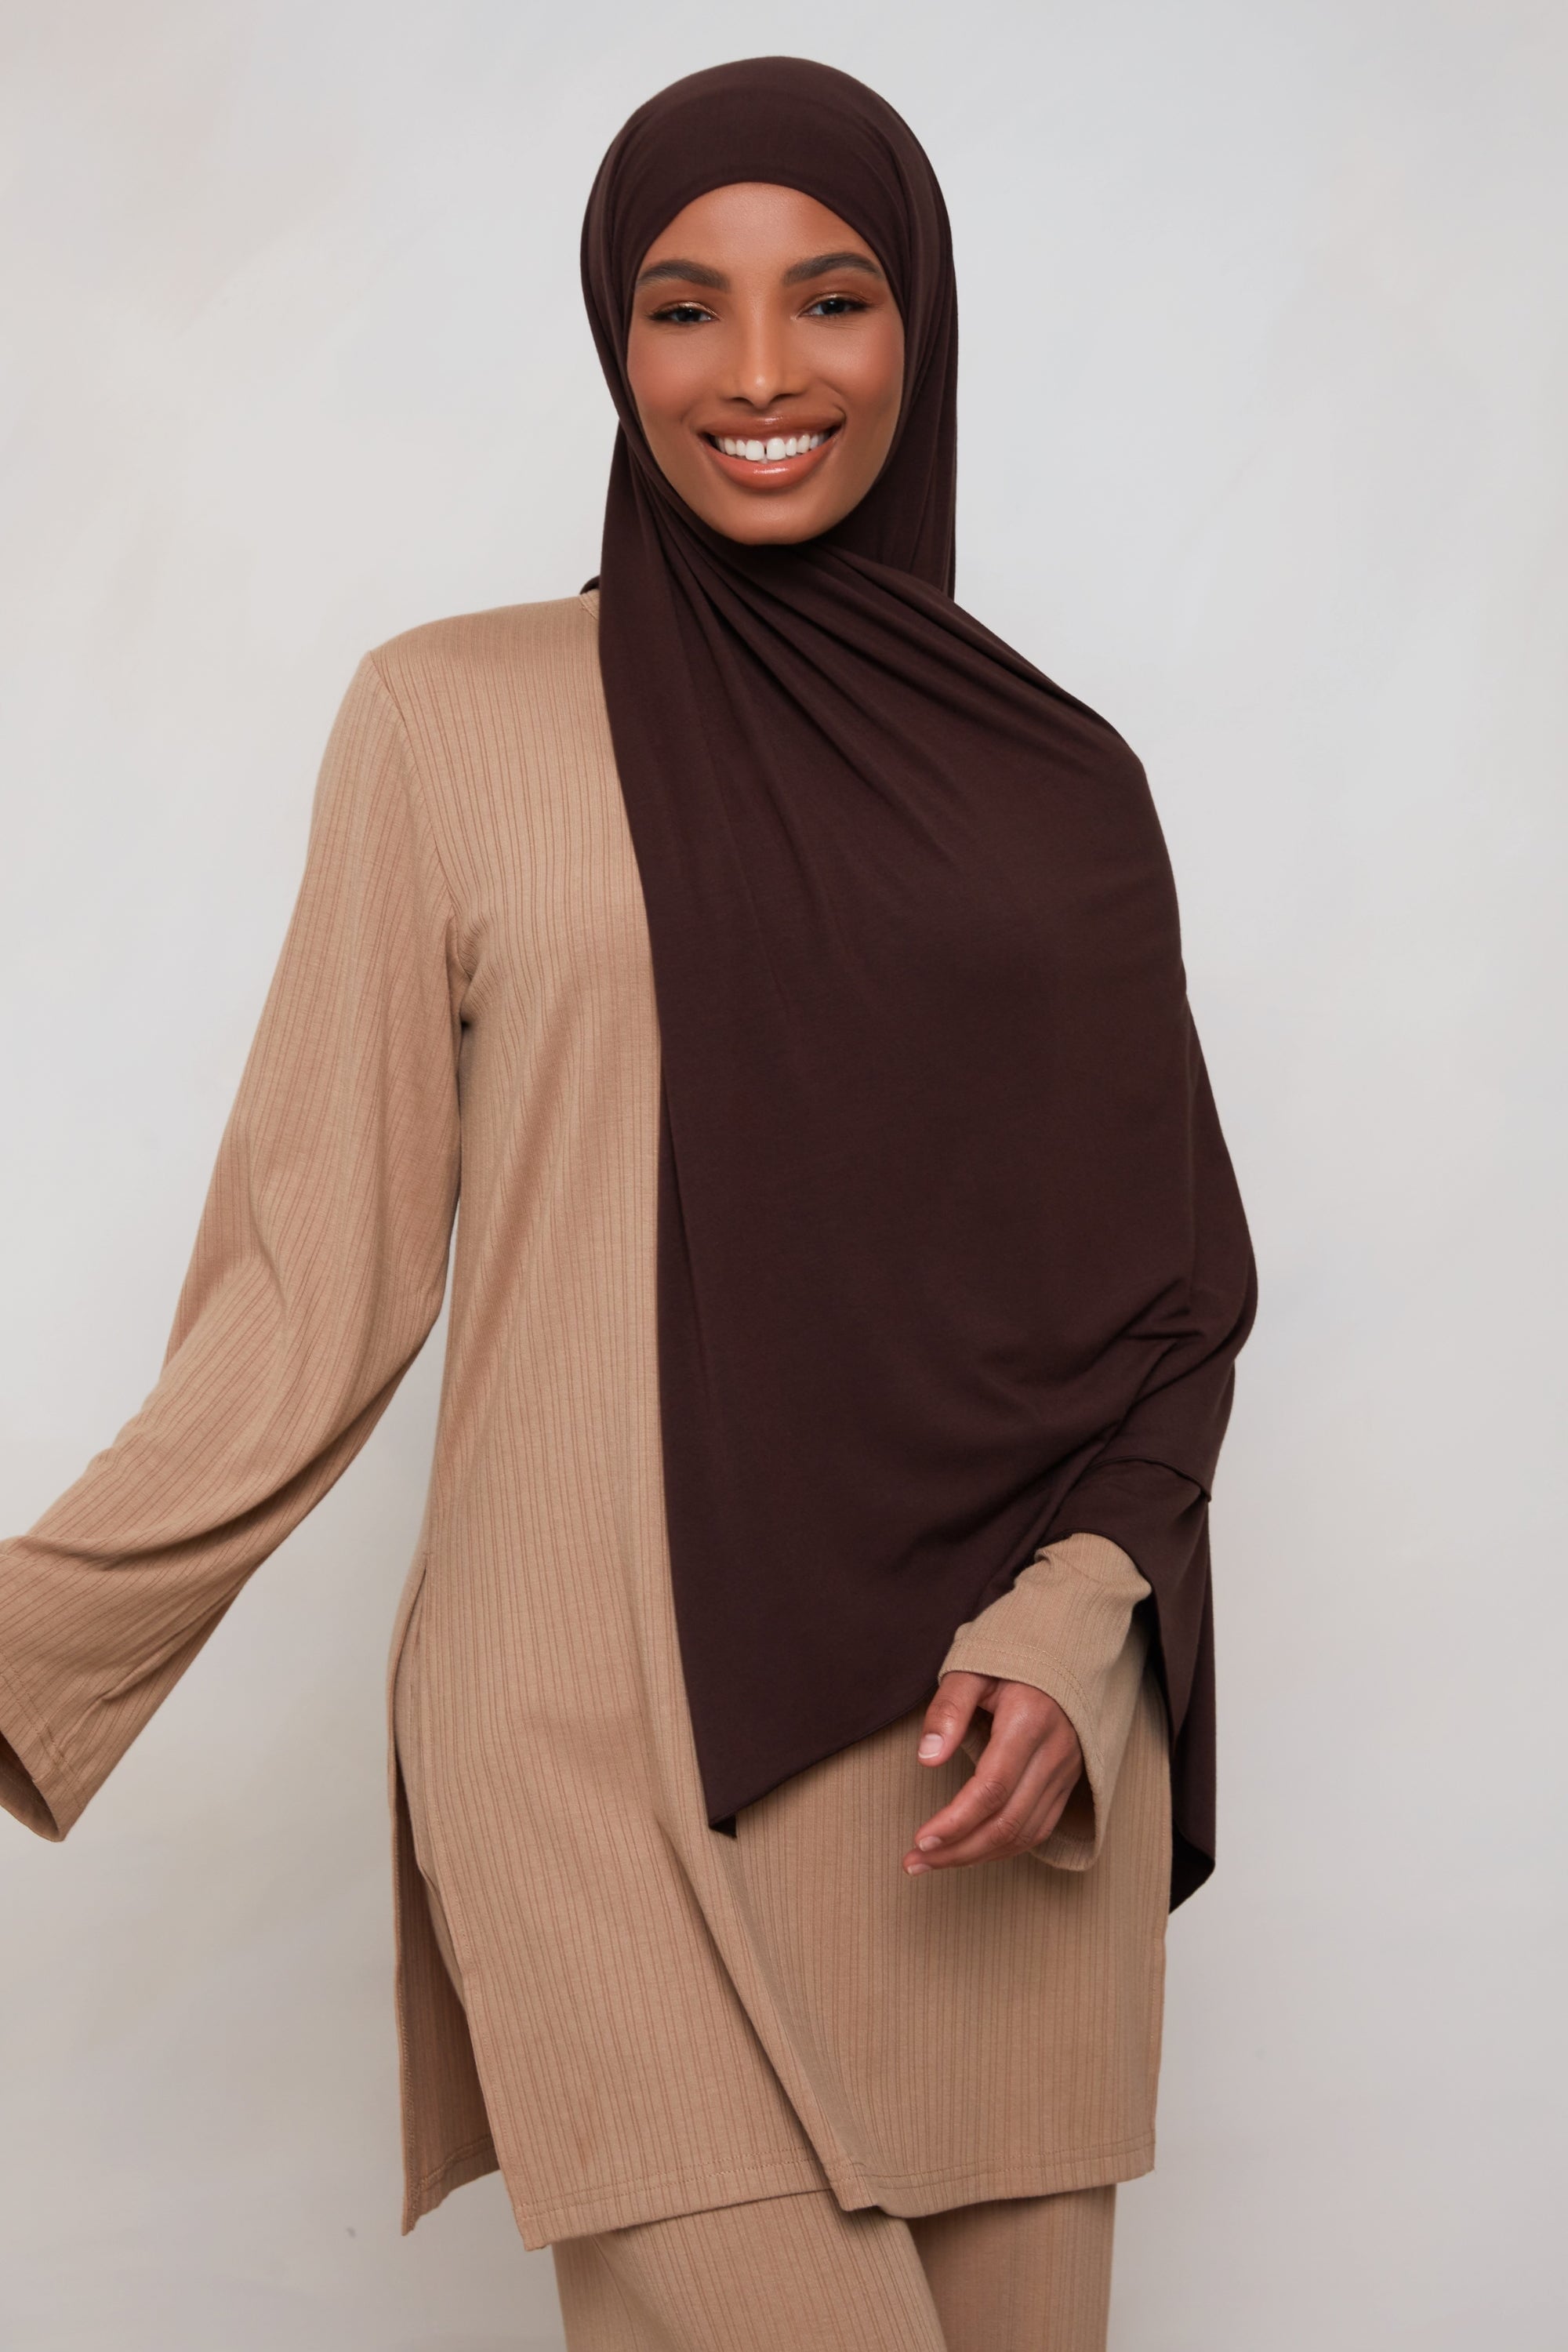 Bamboo Jersey Hijab - Chocolate Plum epschoolboard 